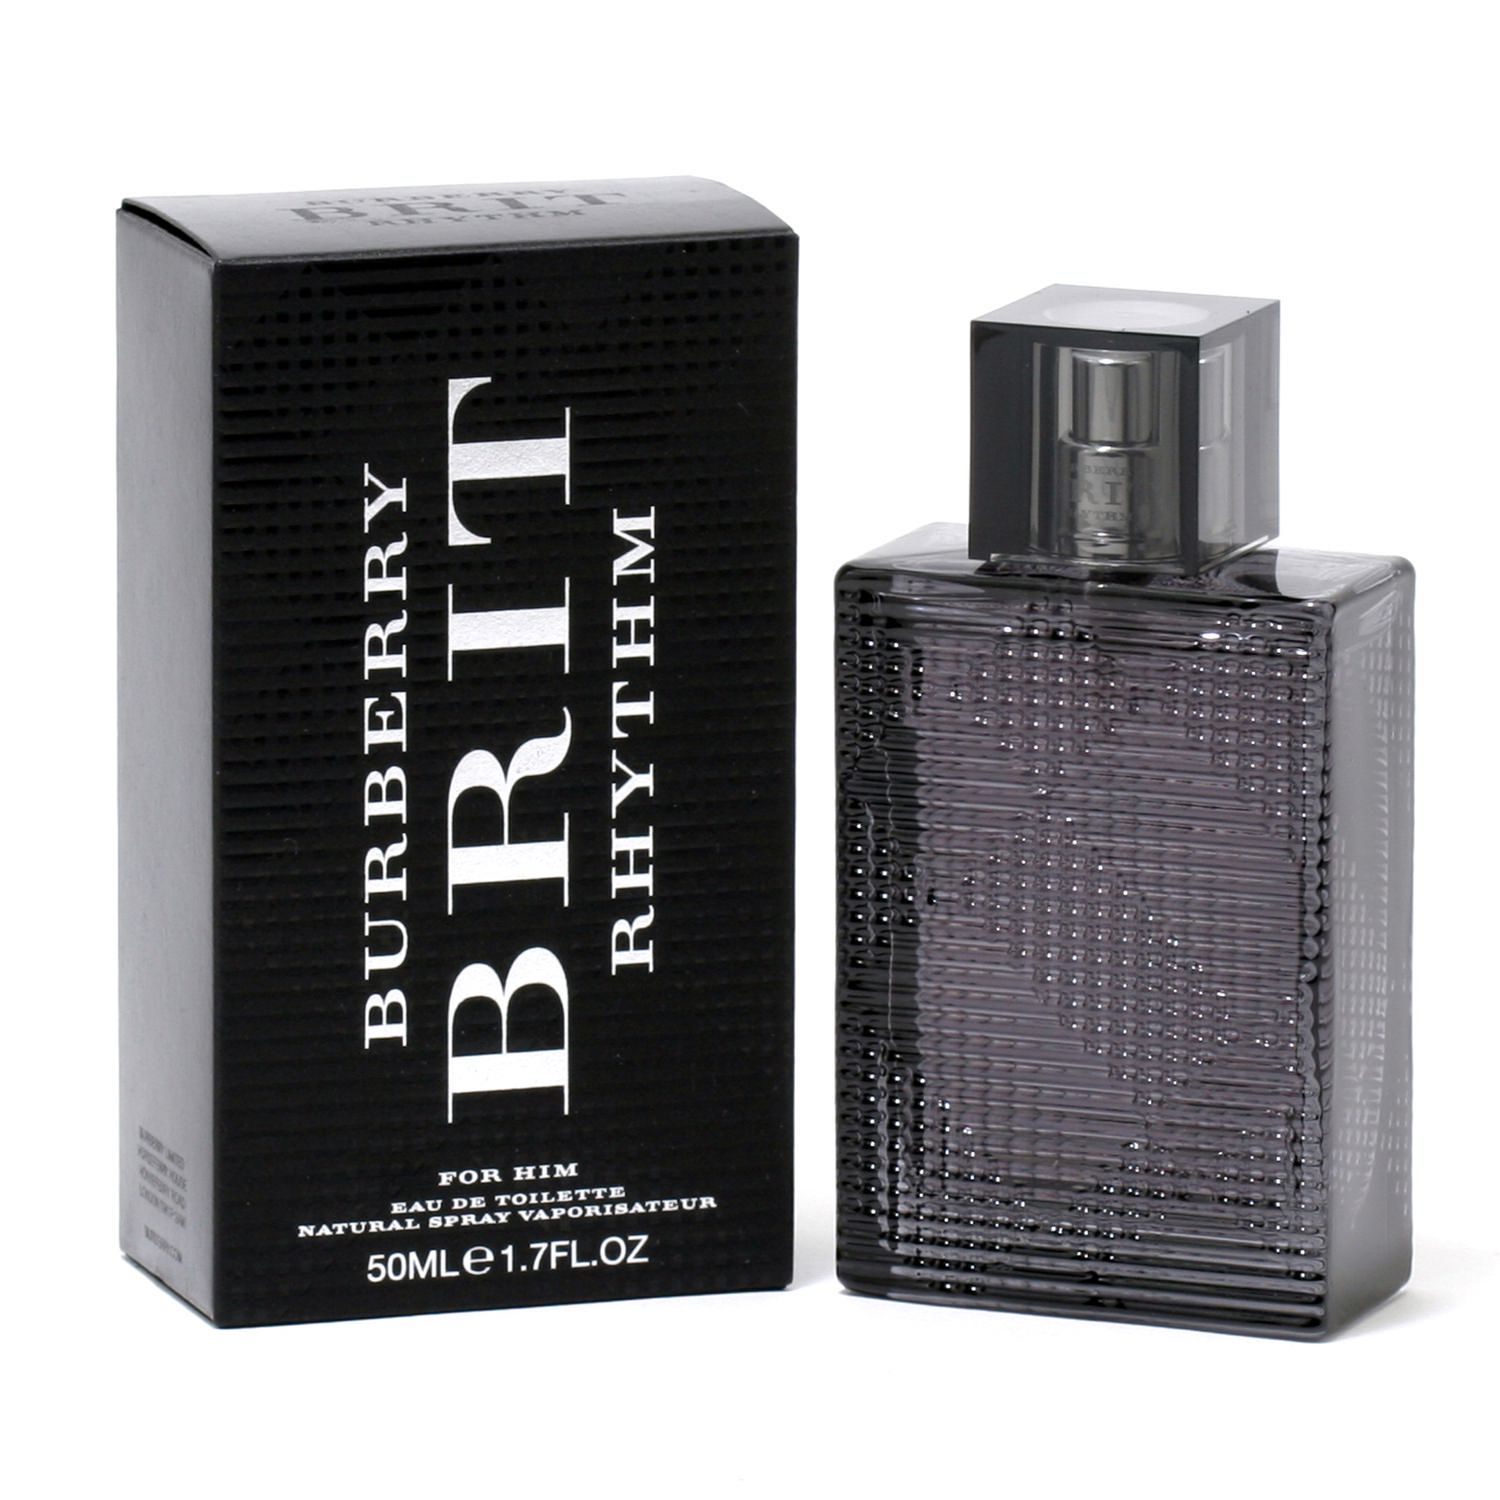 burberry brit scent